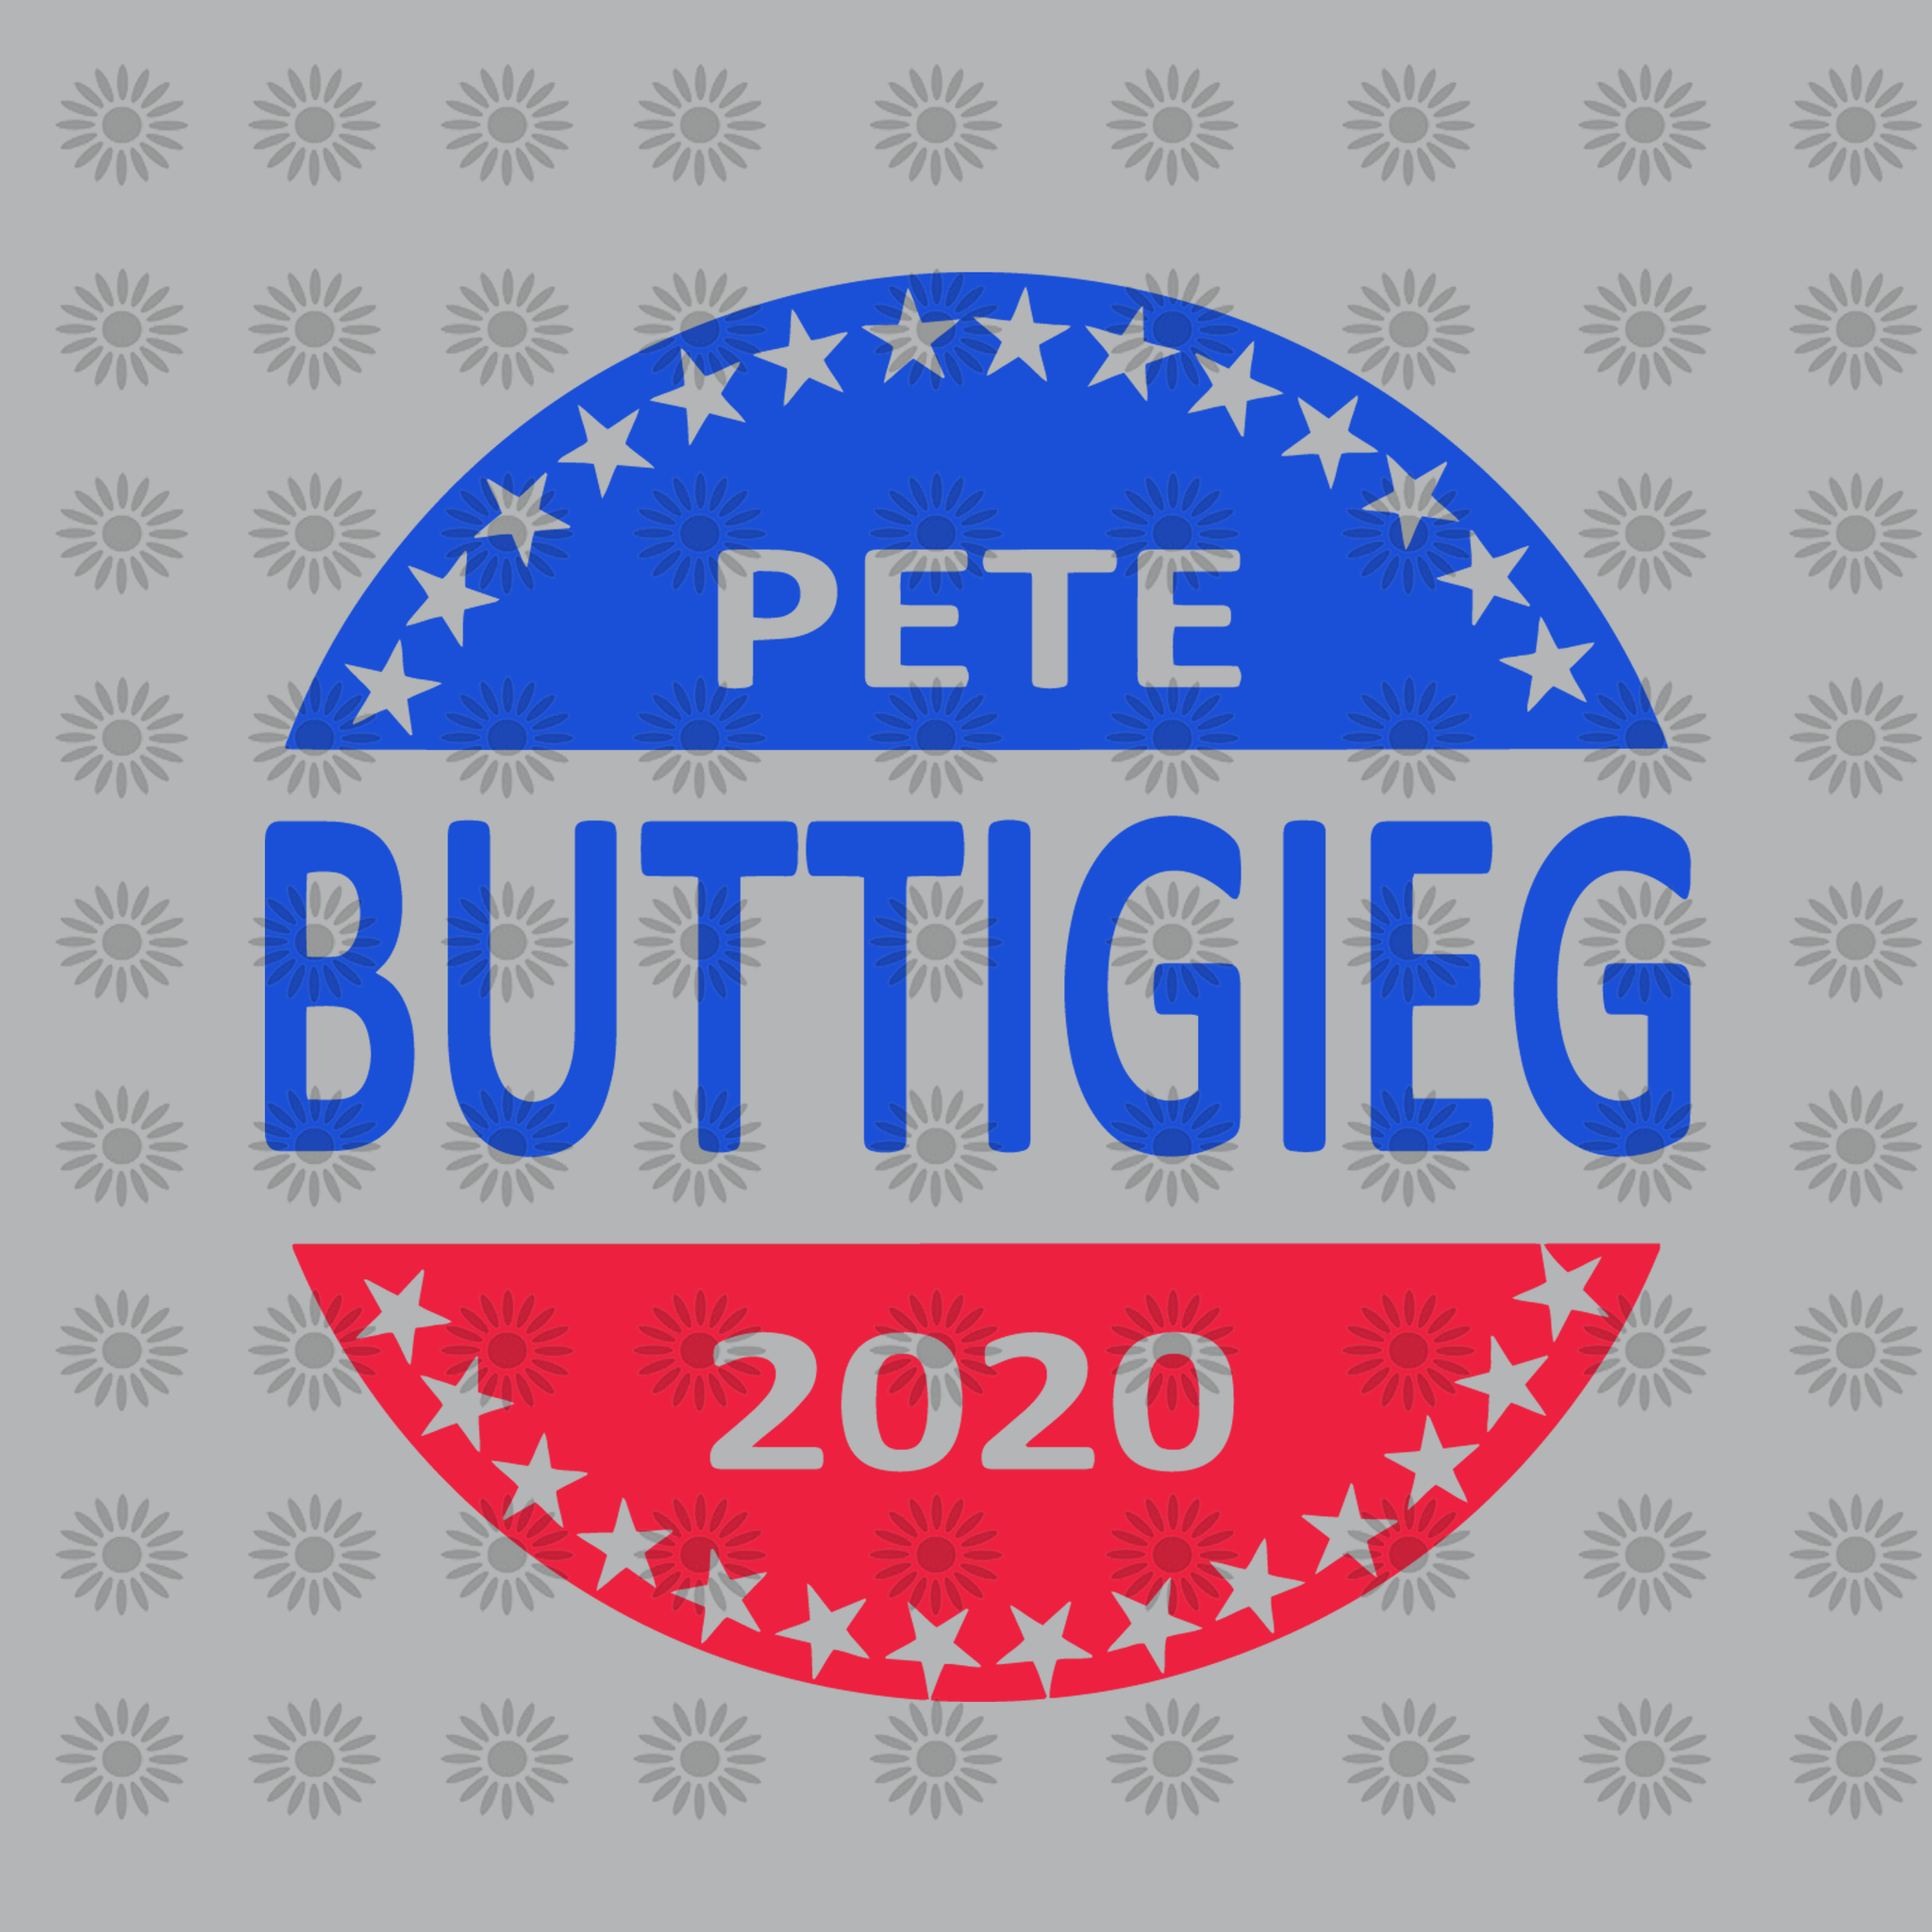 Pete buttigieg 2020, Pete buttigieg 2020 svg, png,dxf,eps file for Cricut, Silhouette